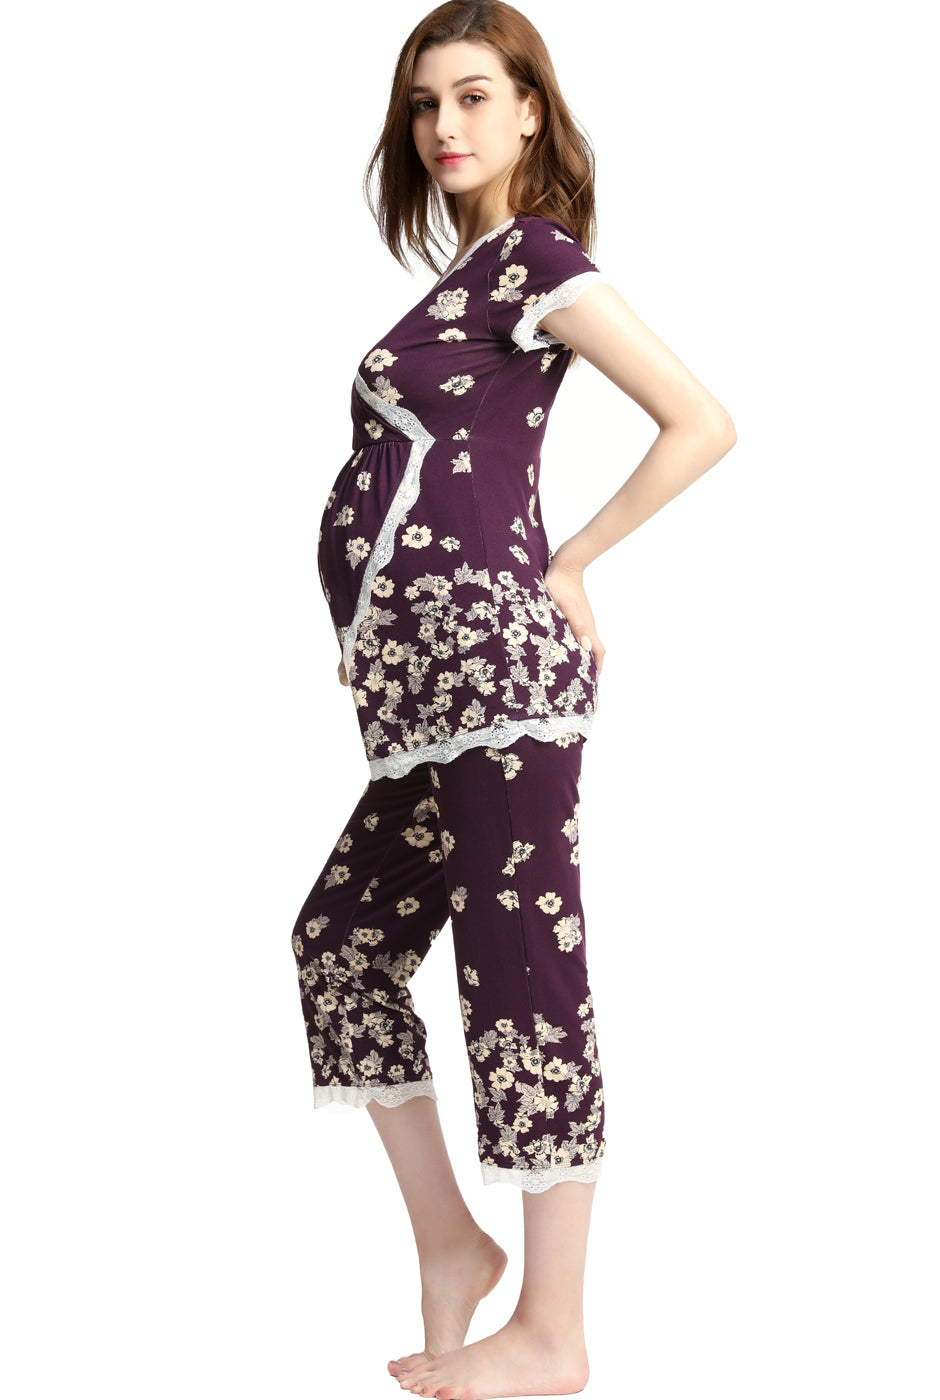 Maternity Pyjamas & Loungewear, Nursing Sleepwear